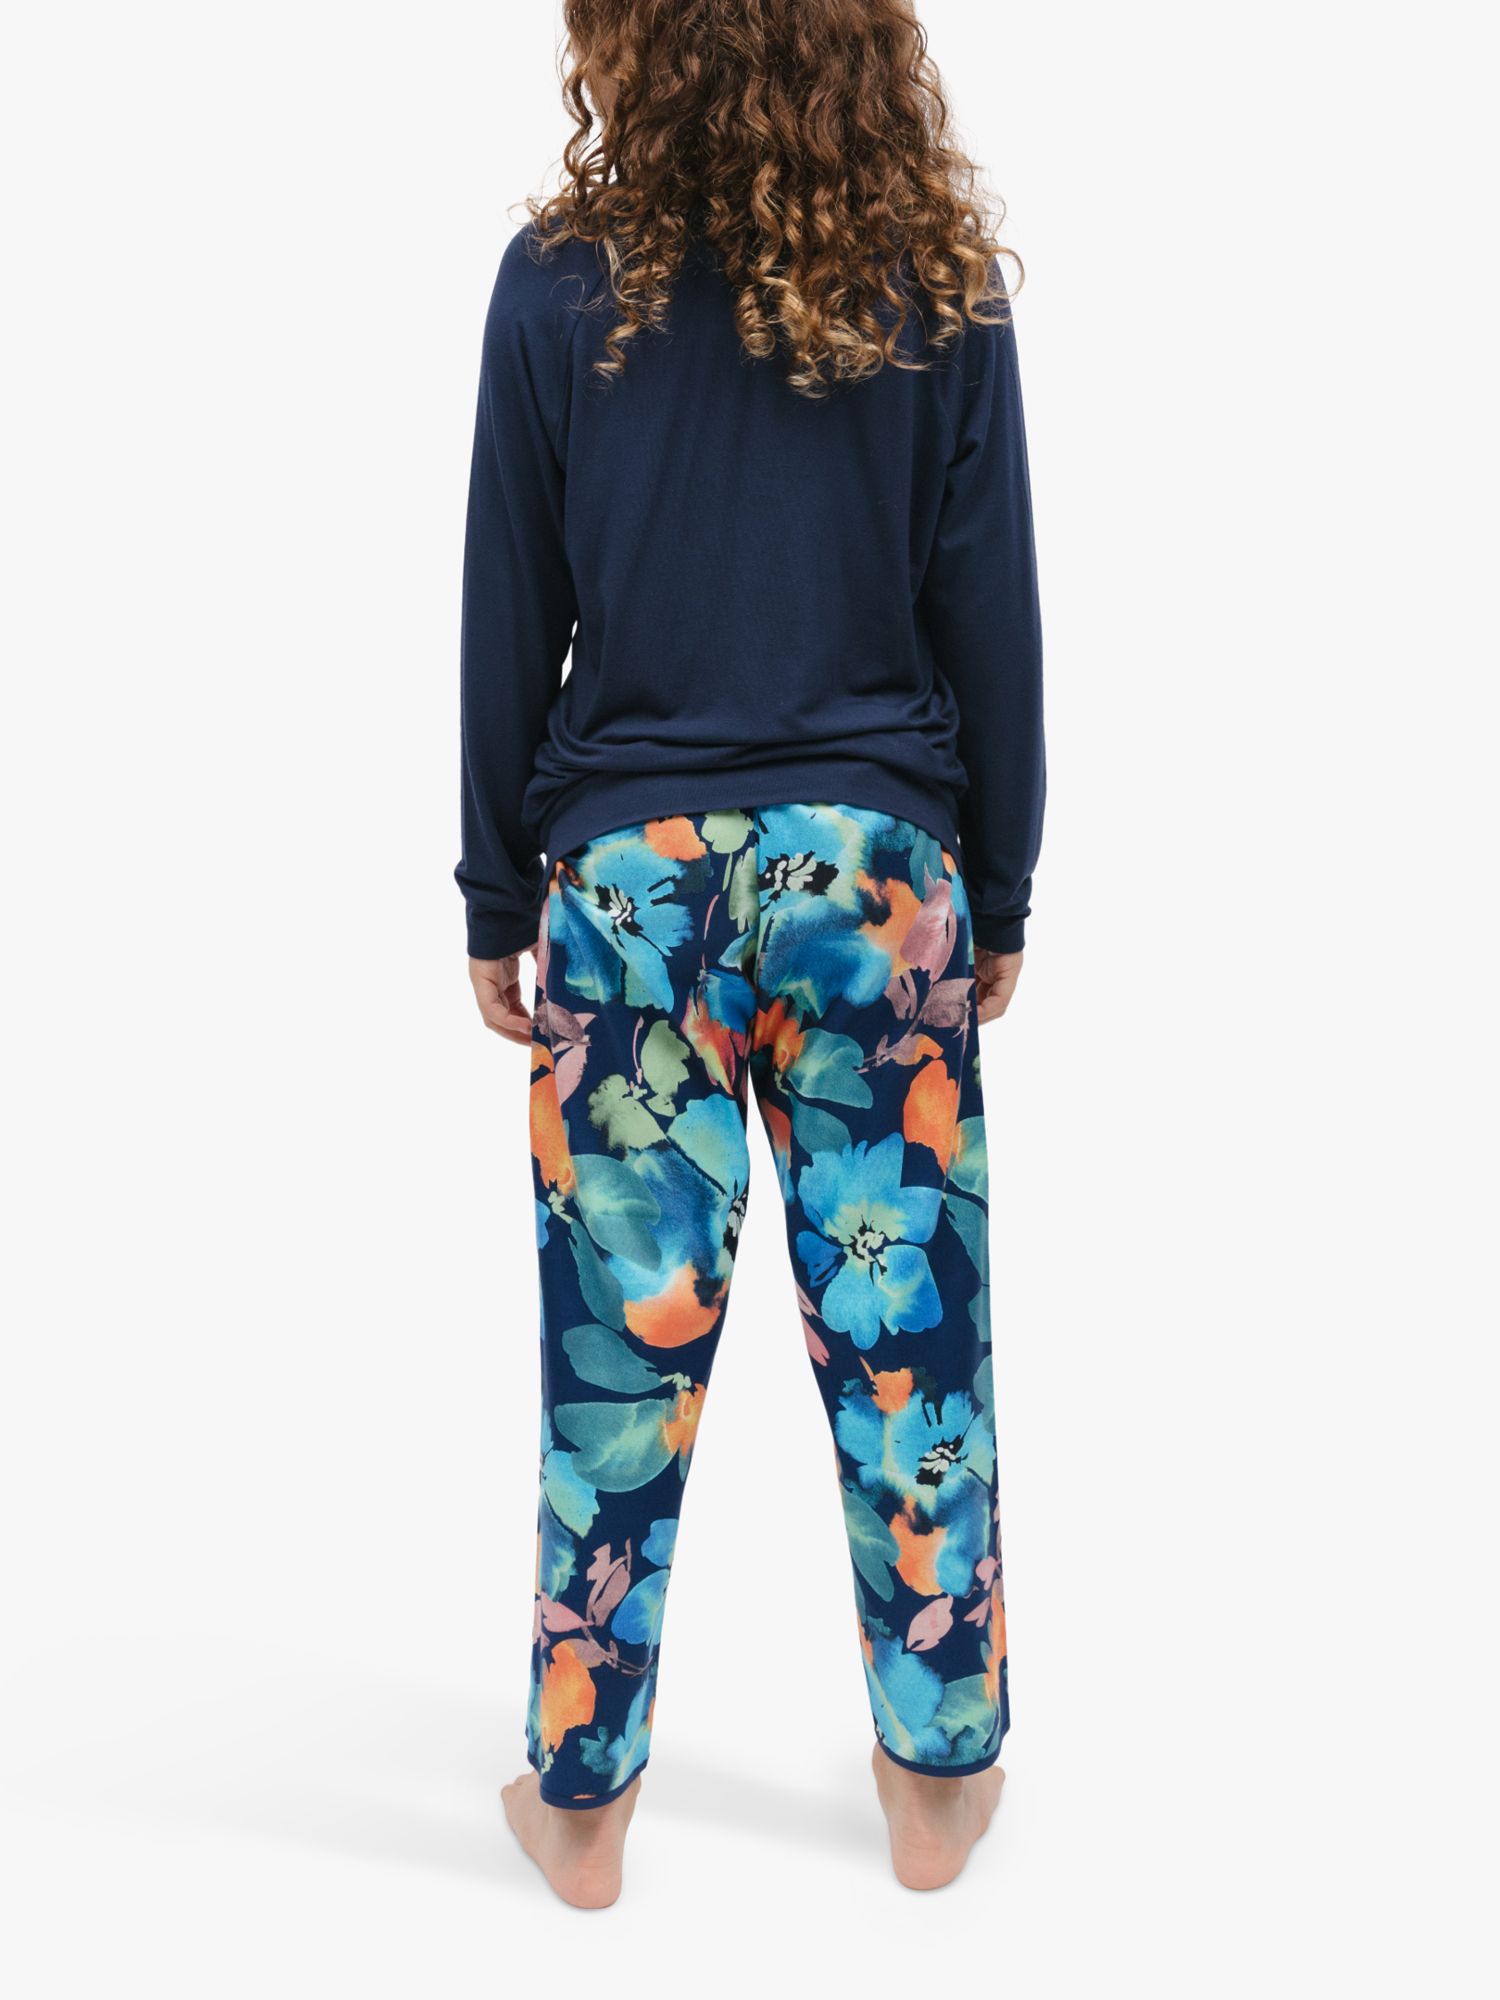 Minijammies Kids' Bea Slouch Top and Floral Print Pyjama Bottoms Set, Dark Blue, 2-3 years